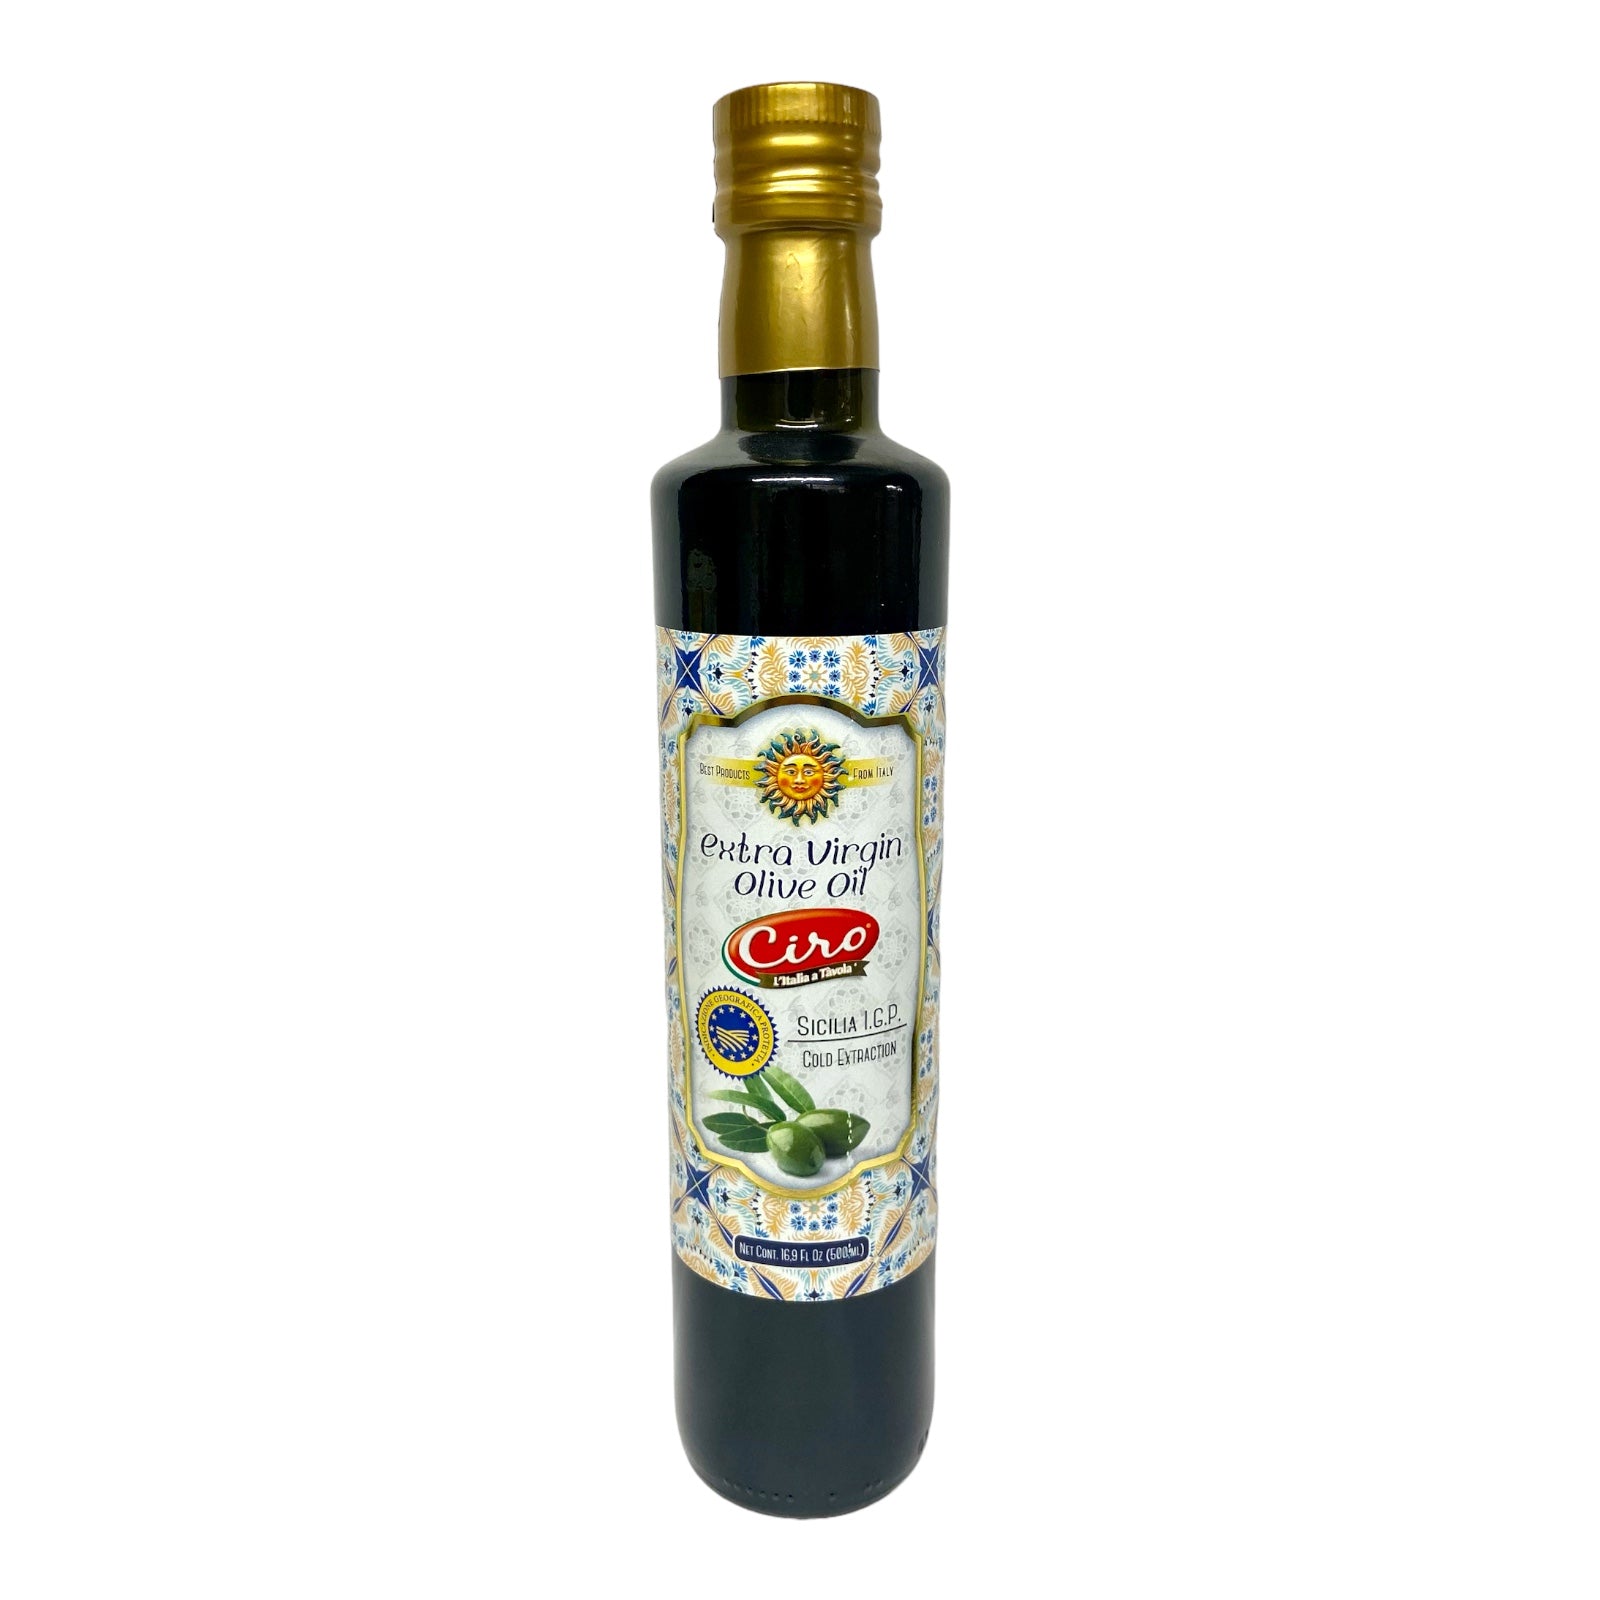 Ciro Extra Virgin Olive Oil Sicilia I.G.P. 16.9oz